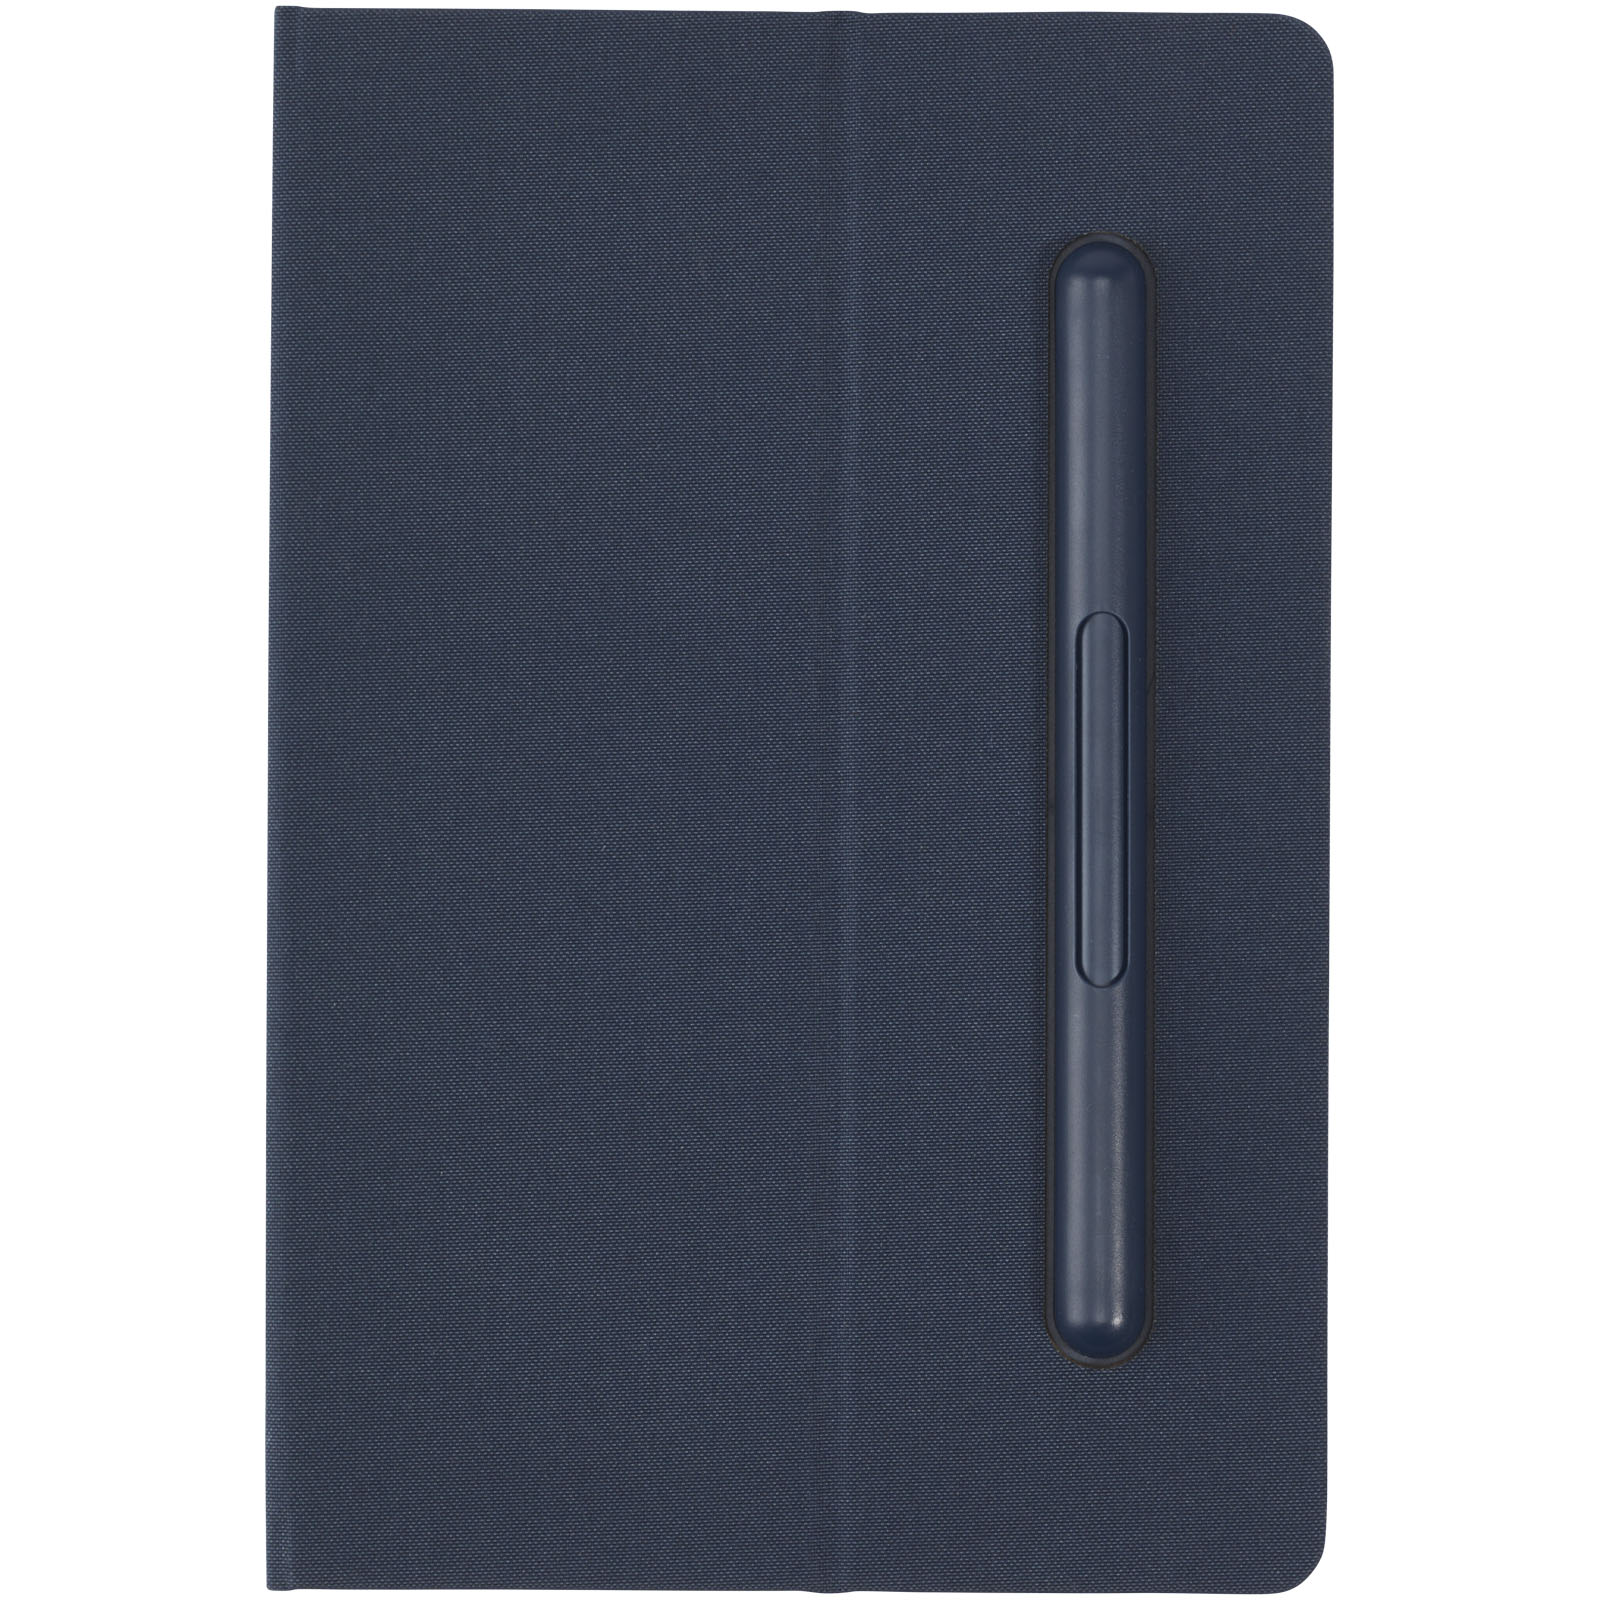 Advertising Hard cover notebooks - Skribo ballpoint pen and notebook set - 2